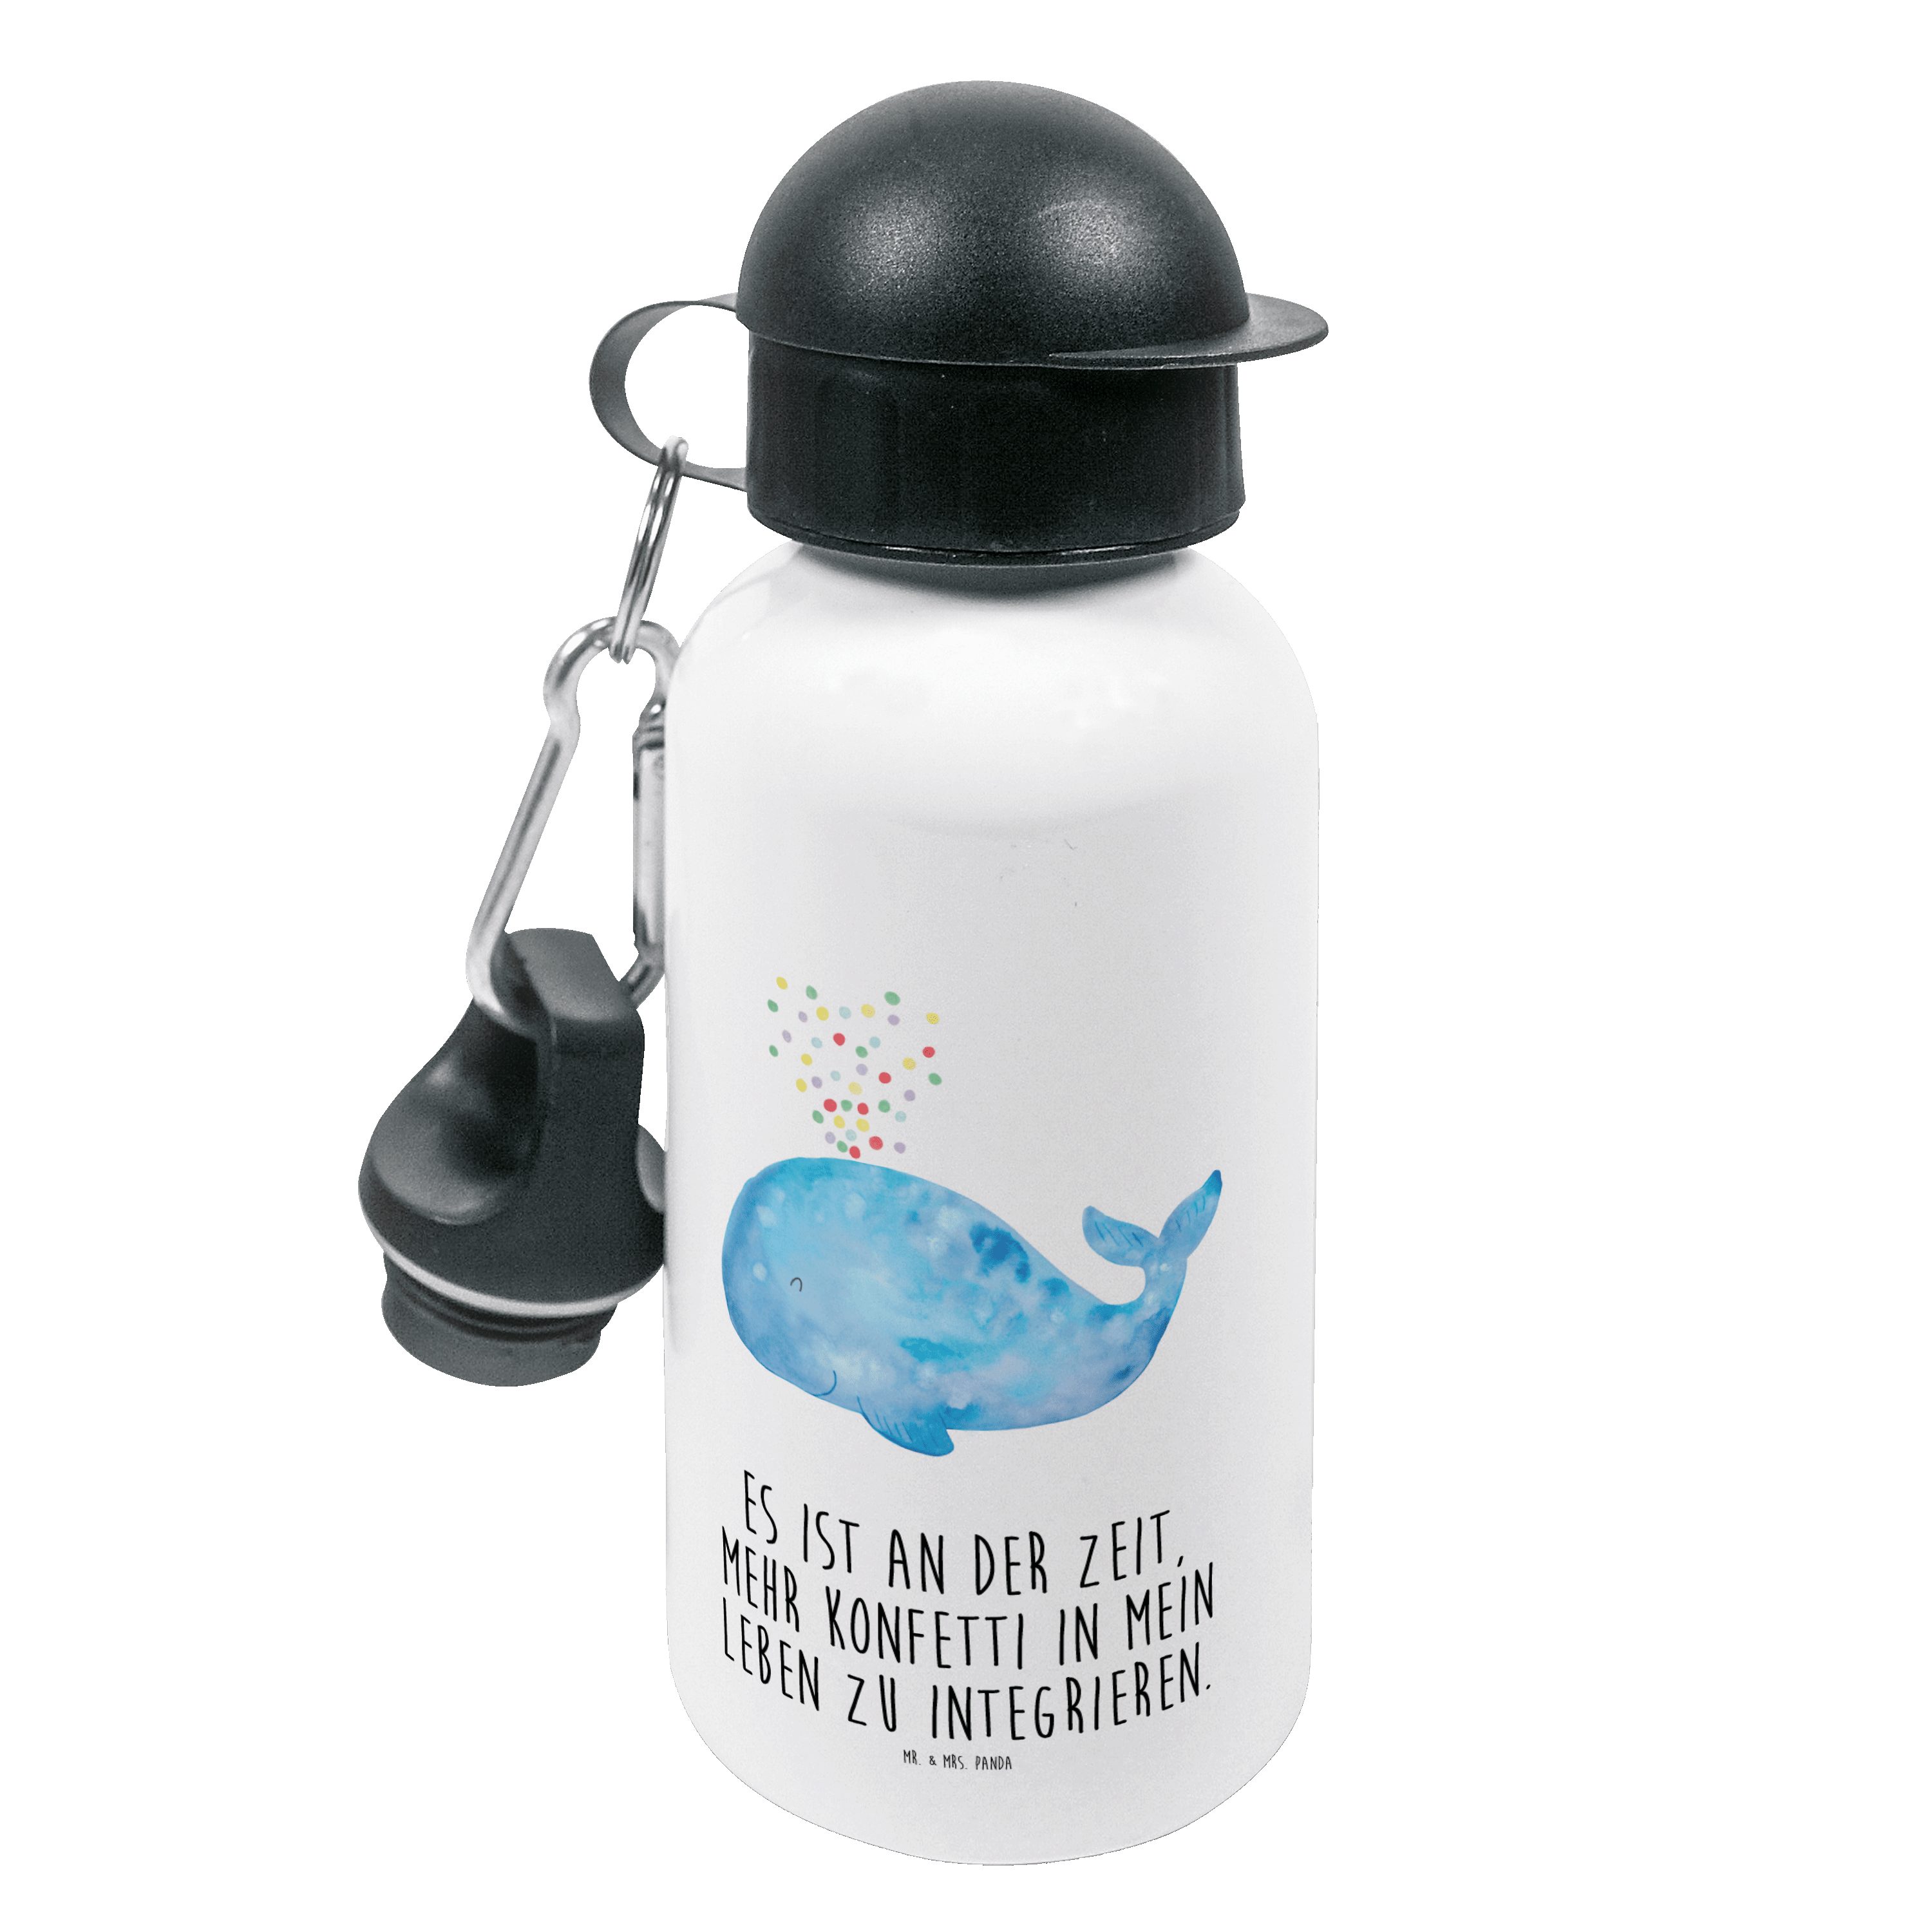 Mr. & Mrs. Panda Trinkflasche Wal Konfetti - Weiß - Geschenk, Kinder Trinkflasche, Kids, Neuanfang